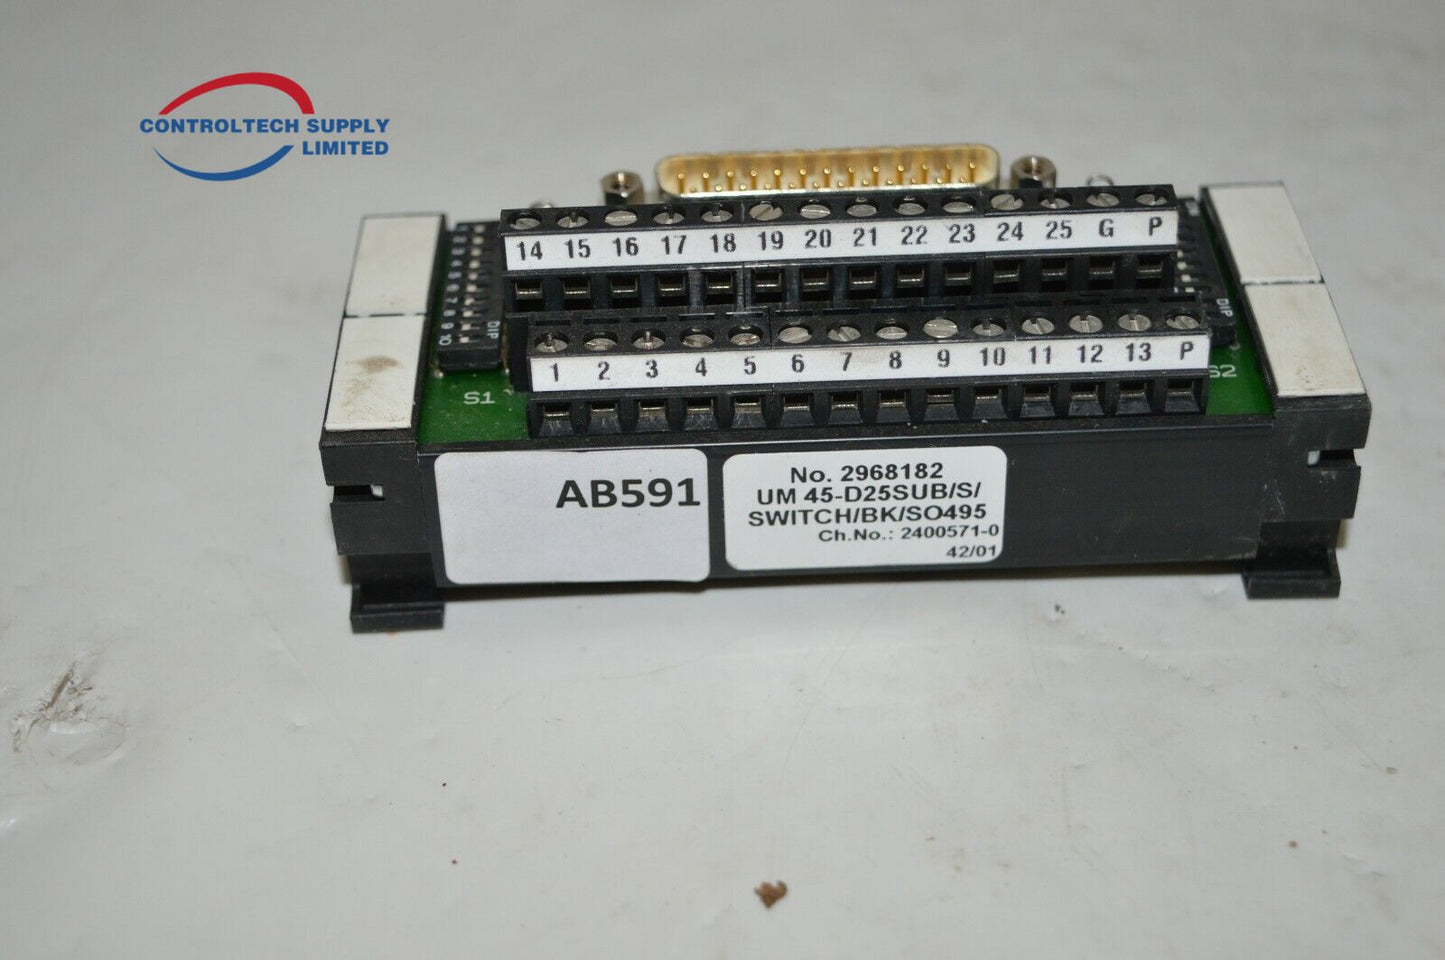 Phoenix 2968182 UM 45-D25SUB/S/SWITCH/BK/SO495 Interface Module